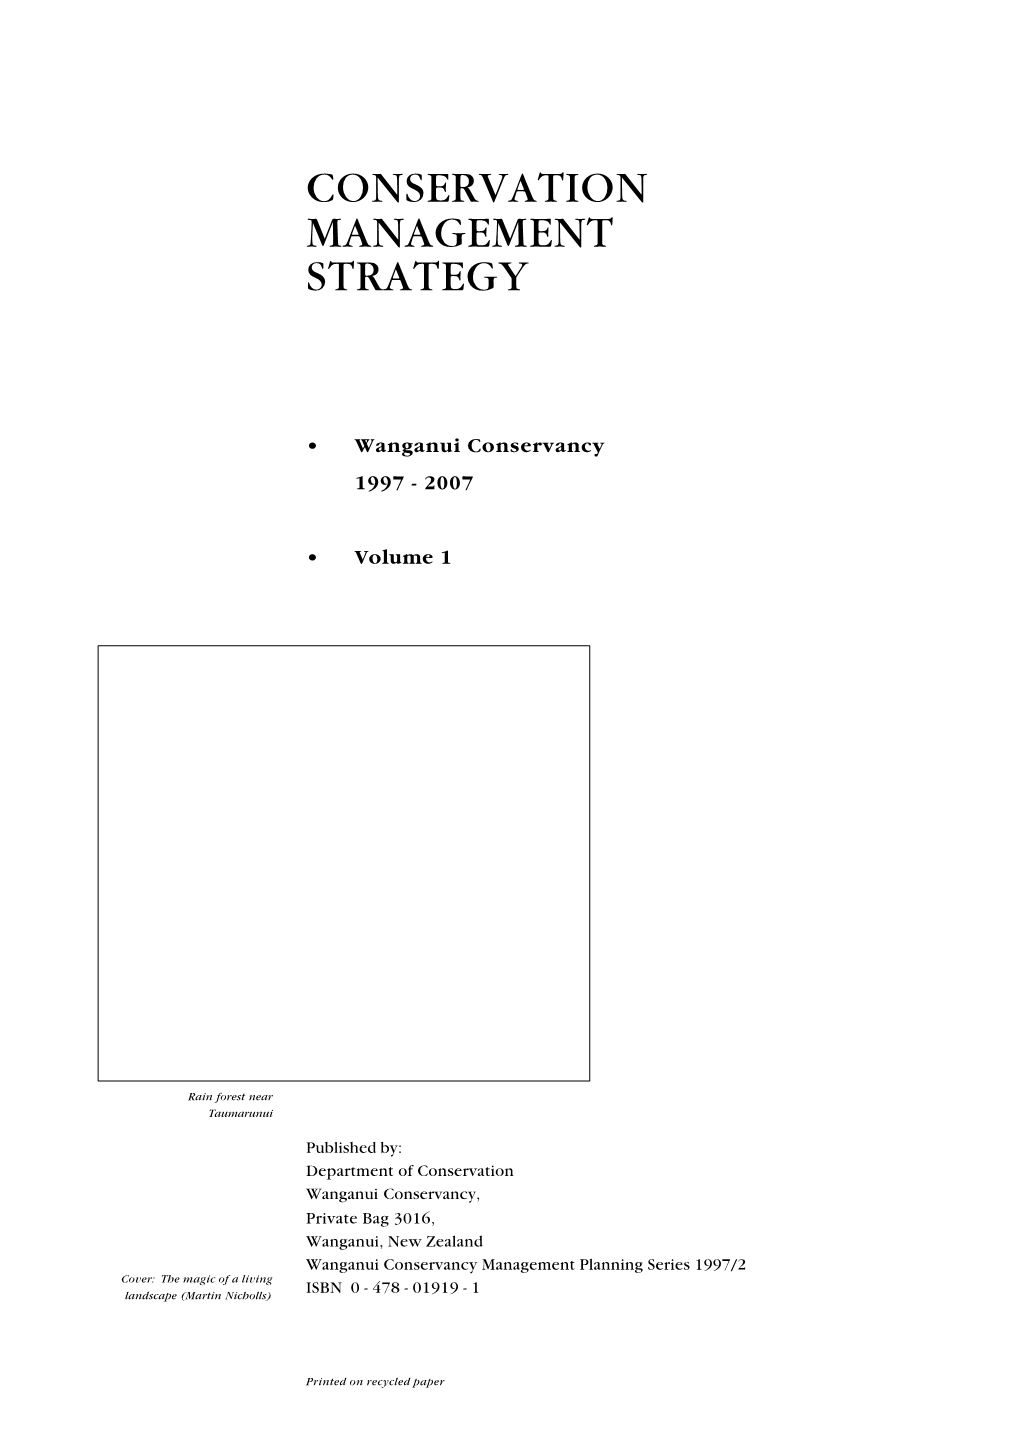 Wanganui Conservation Management Strategy 1997-2007